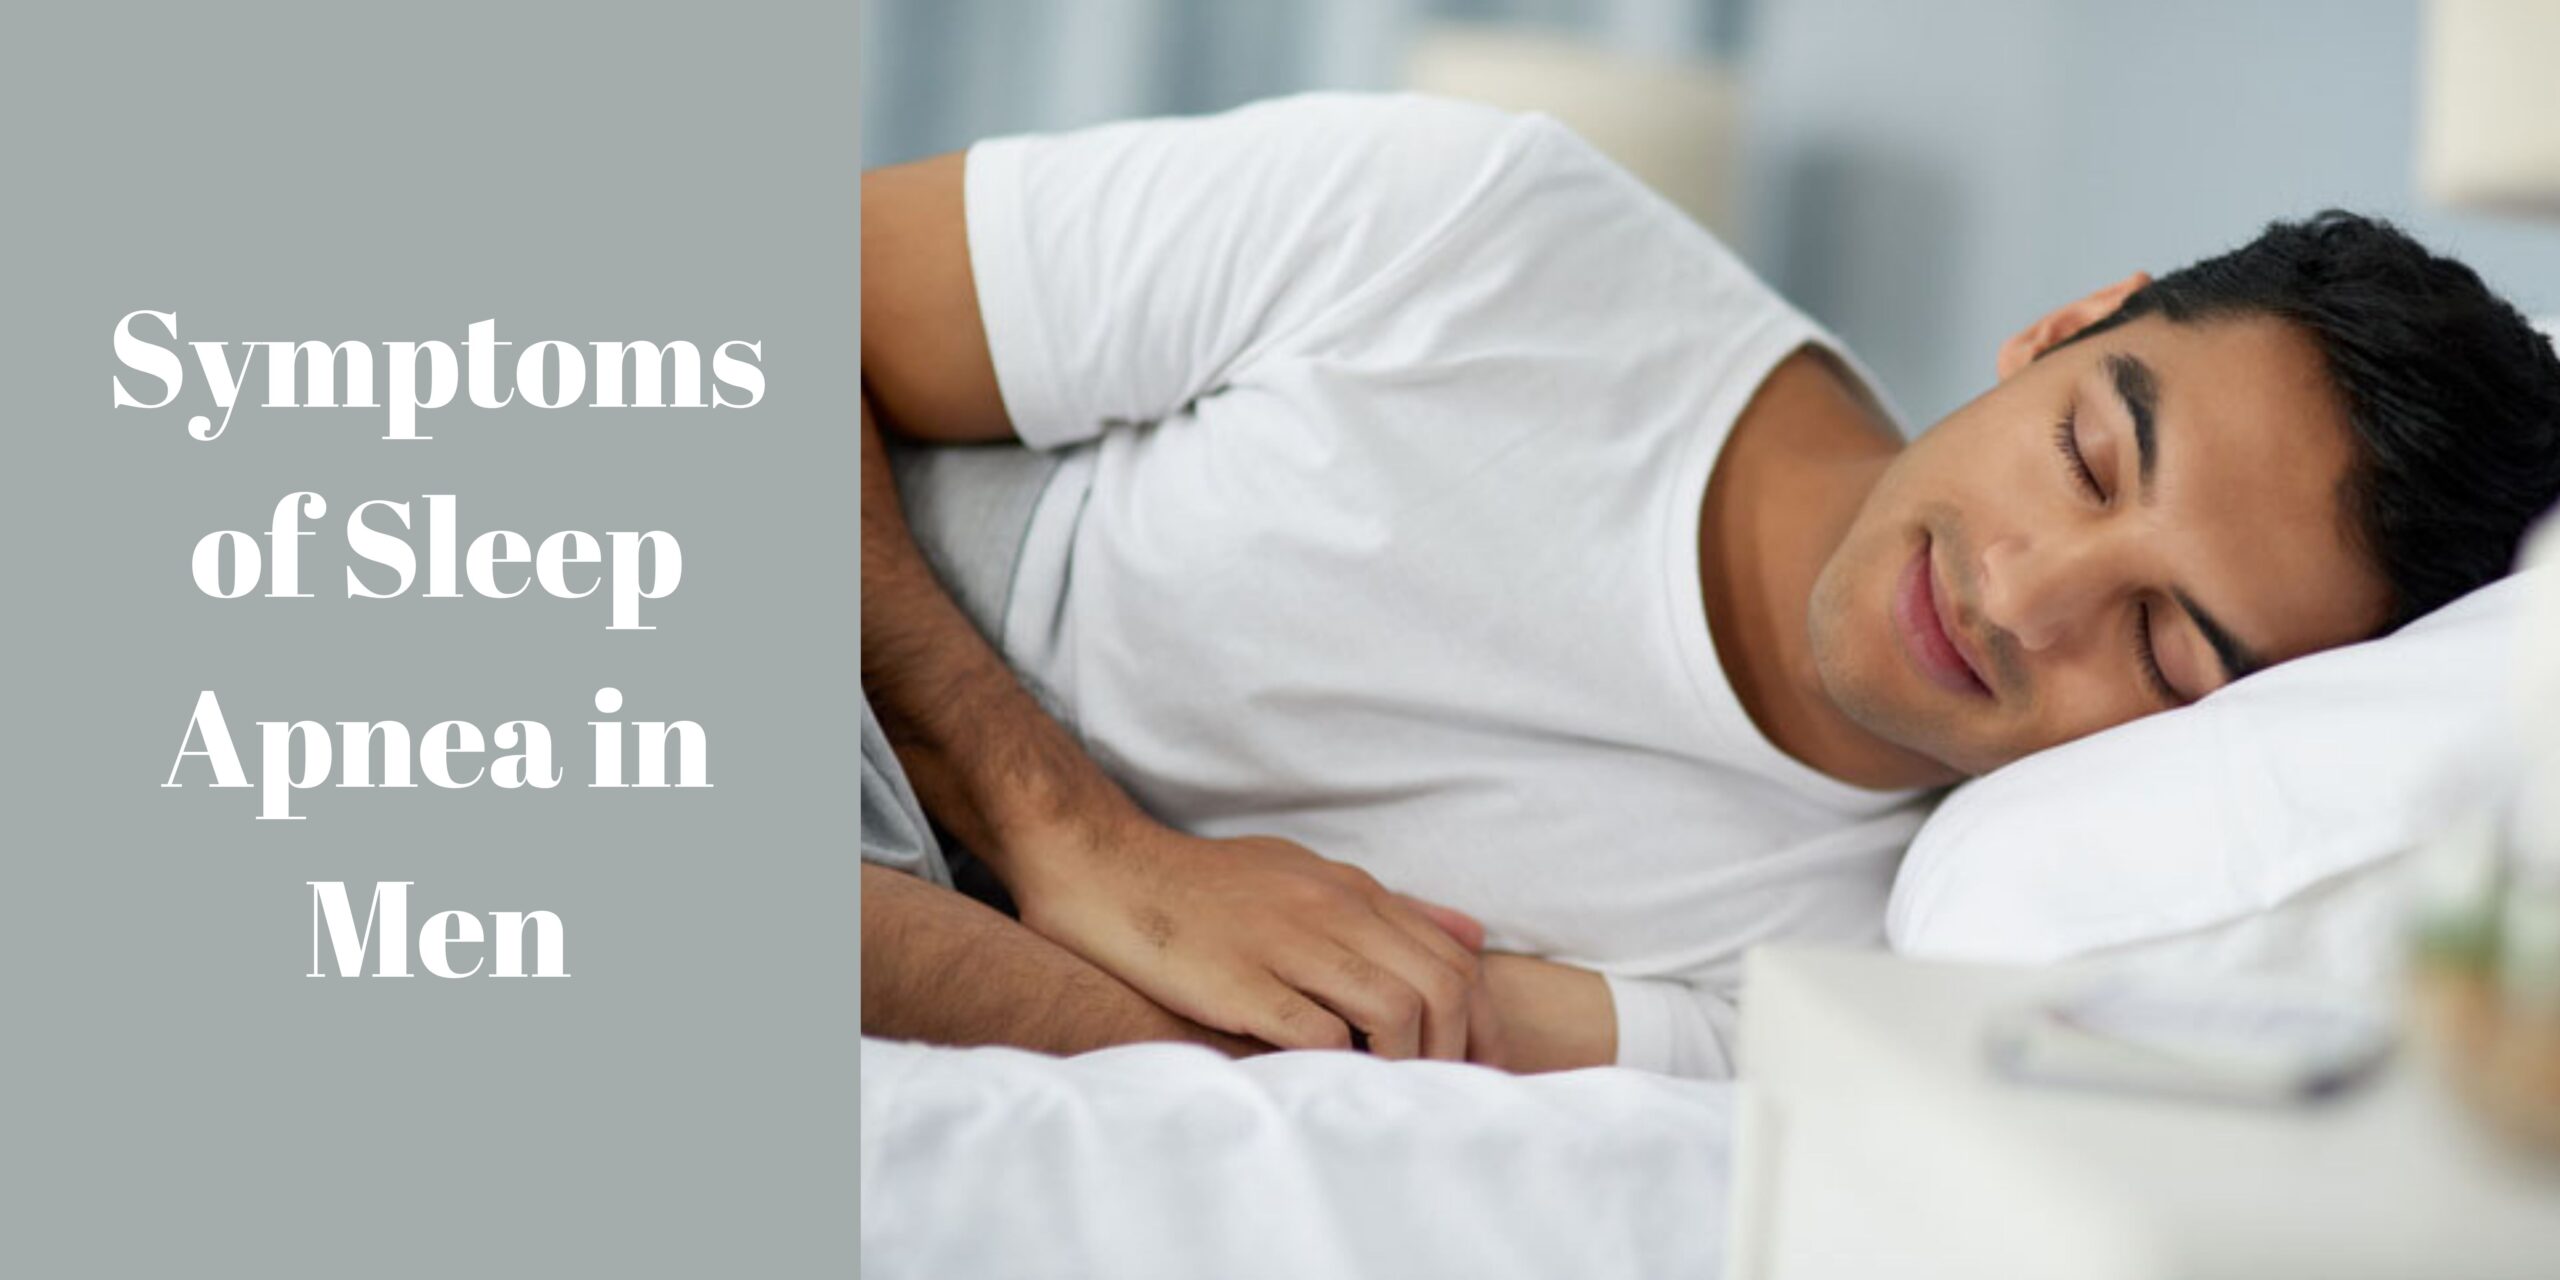 Symptoms of Sleep Apnea in Men